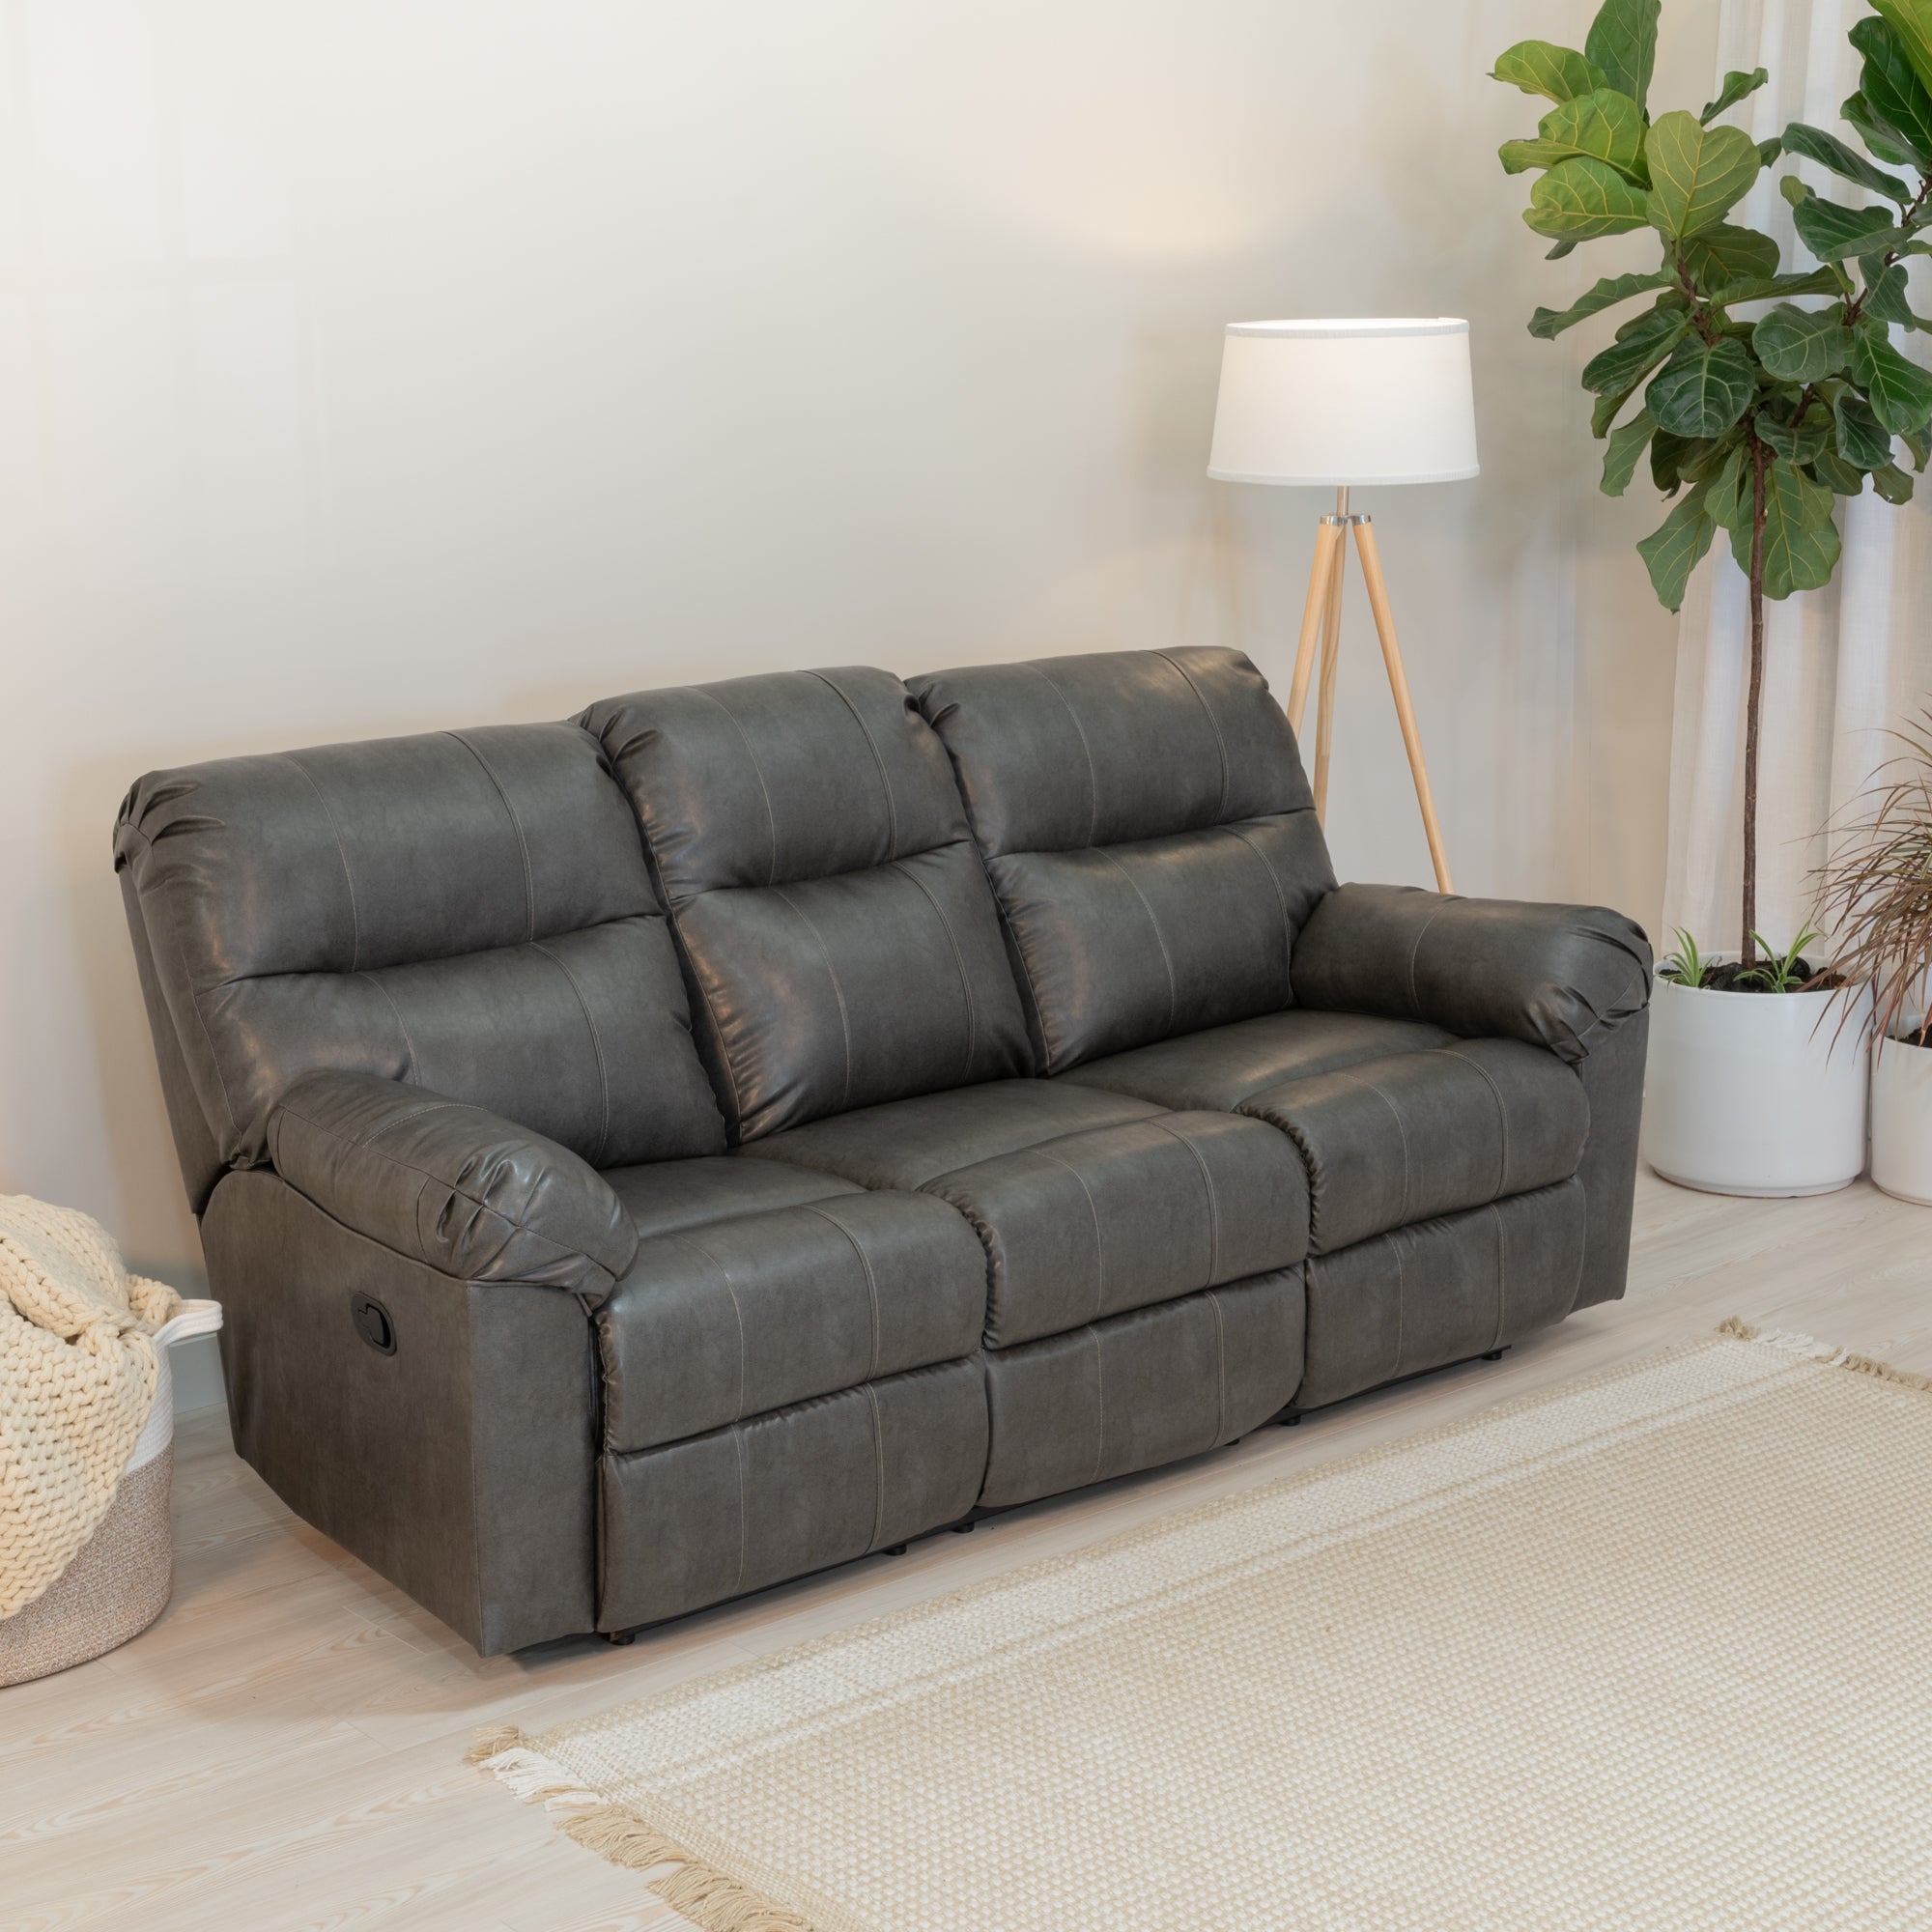 Addington Co Ashbourne Reclining Sofa with Vegan Leather and Manual Controls